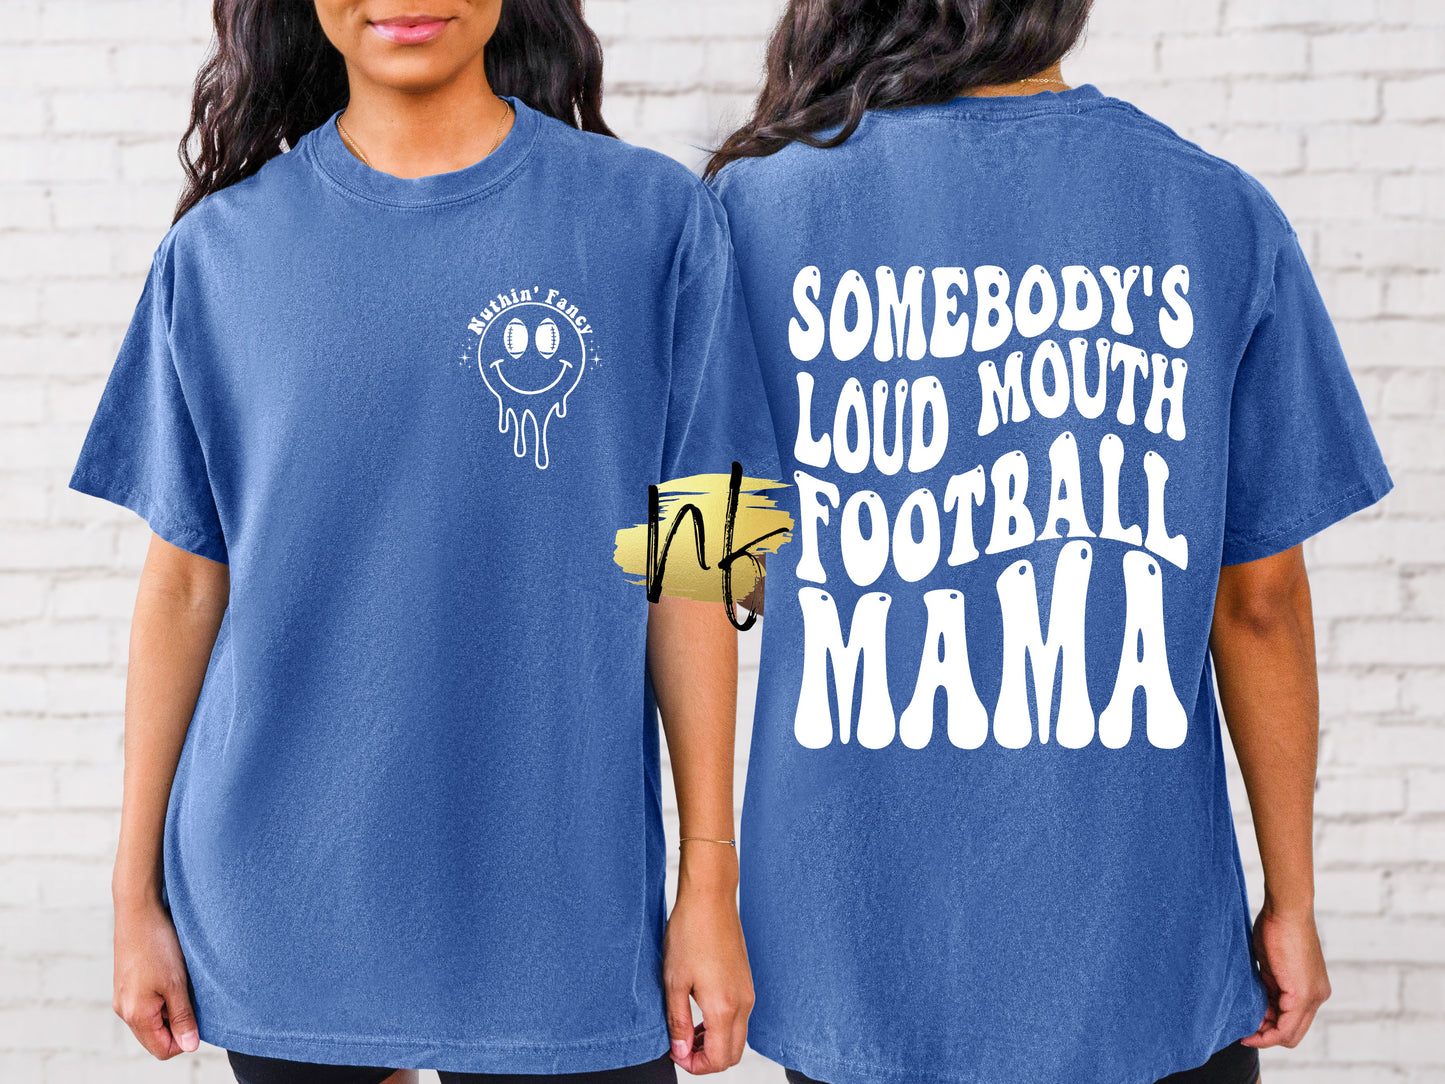 Loud Mouth Football MAMA